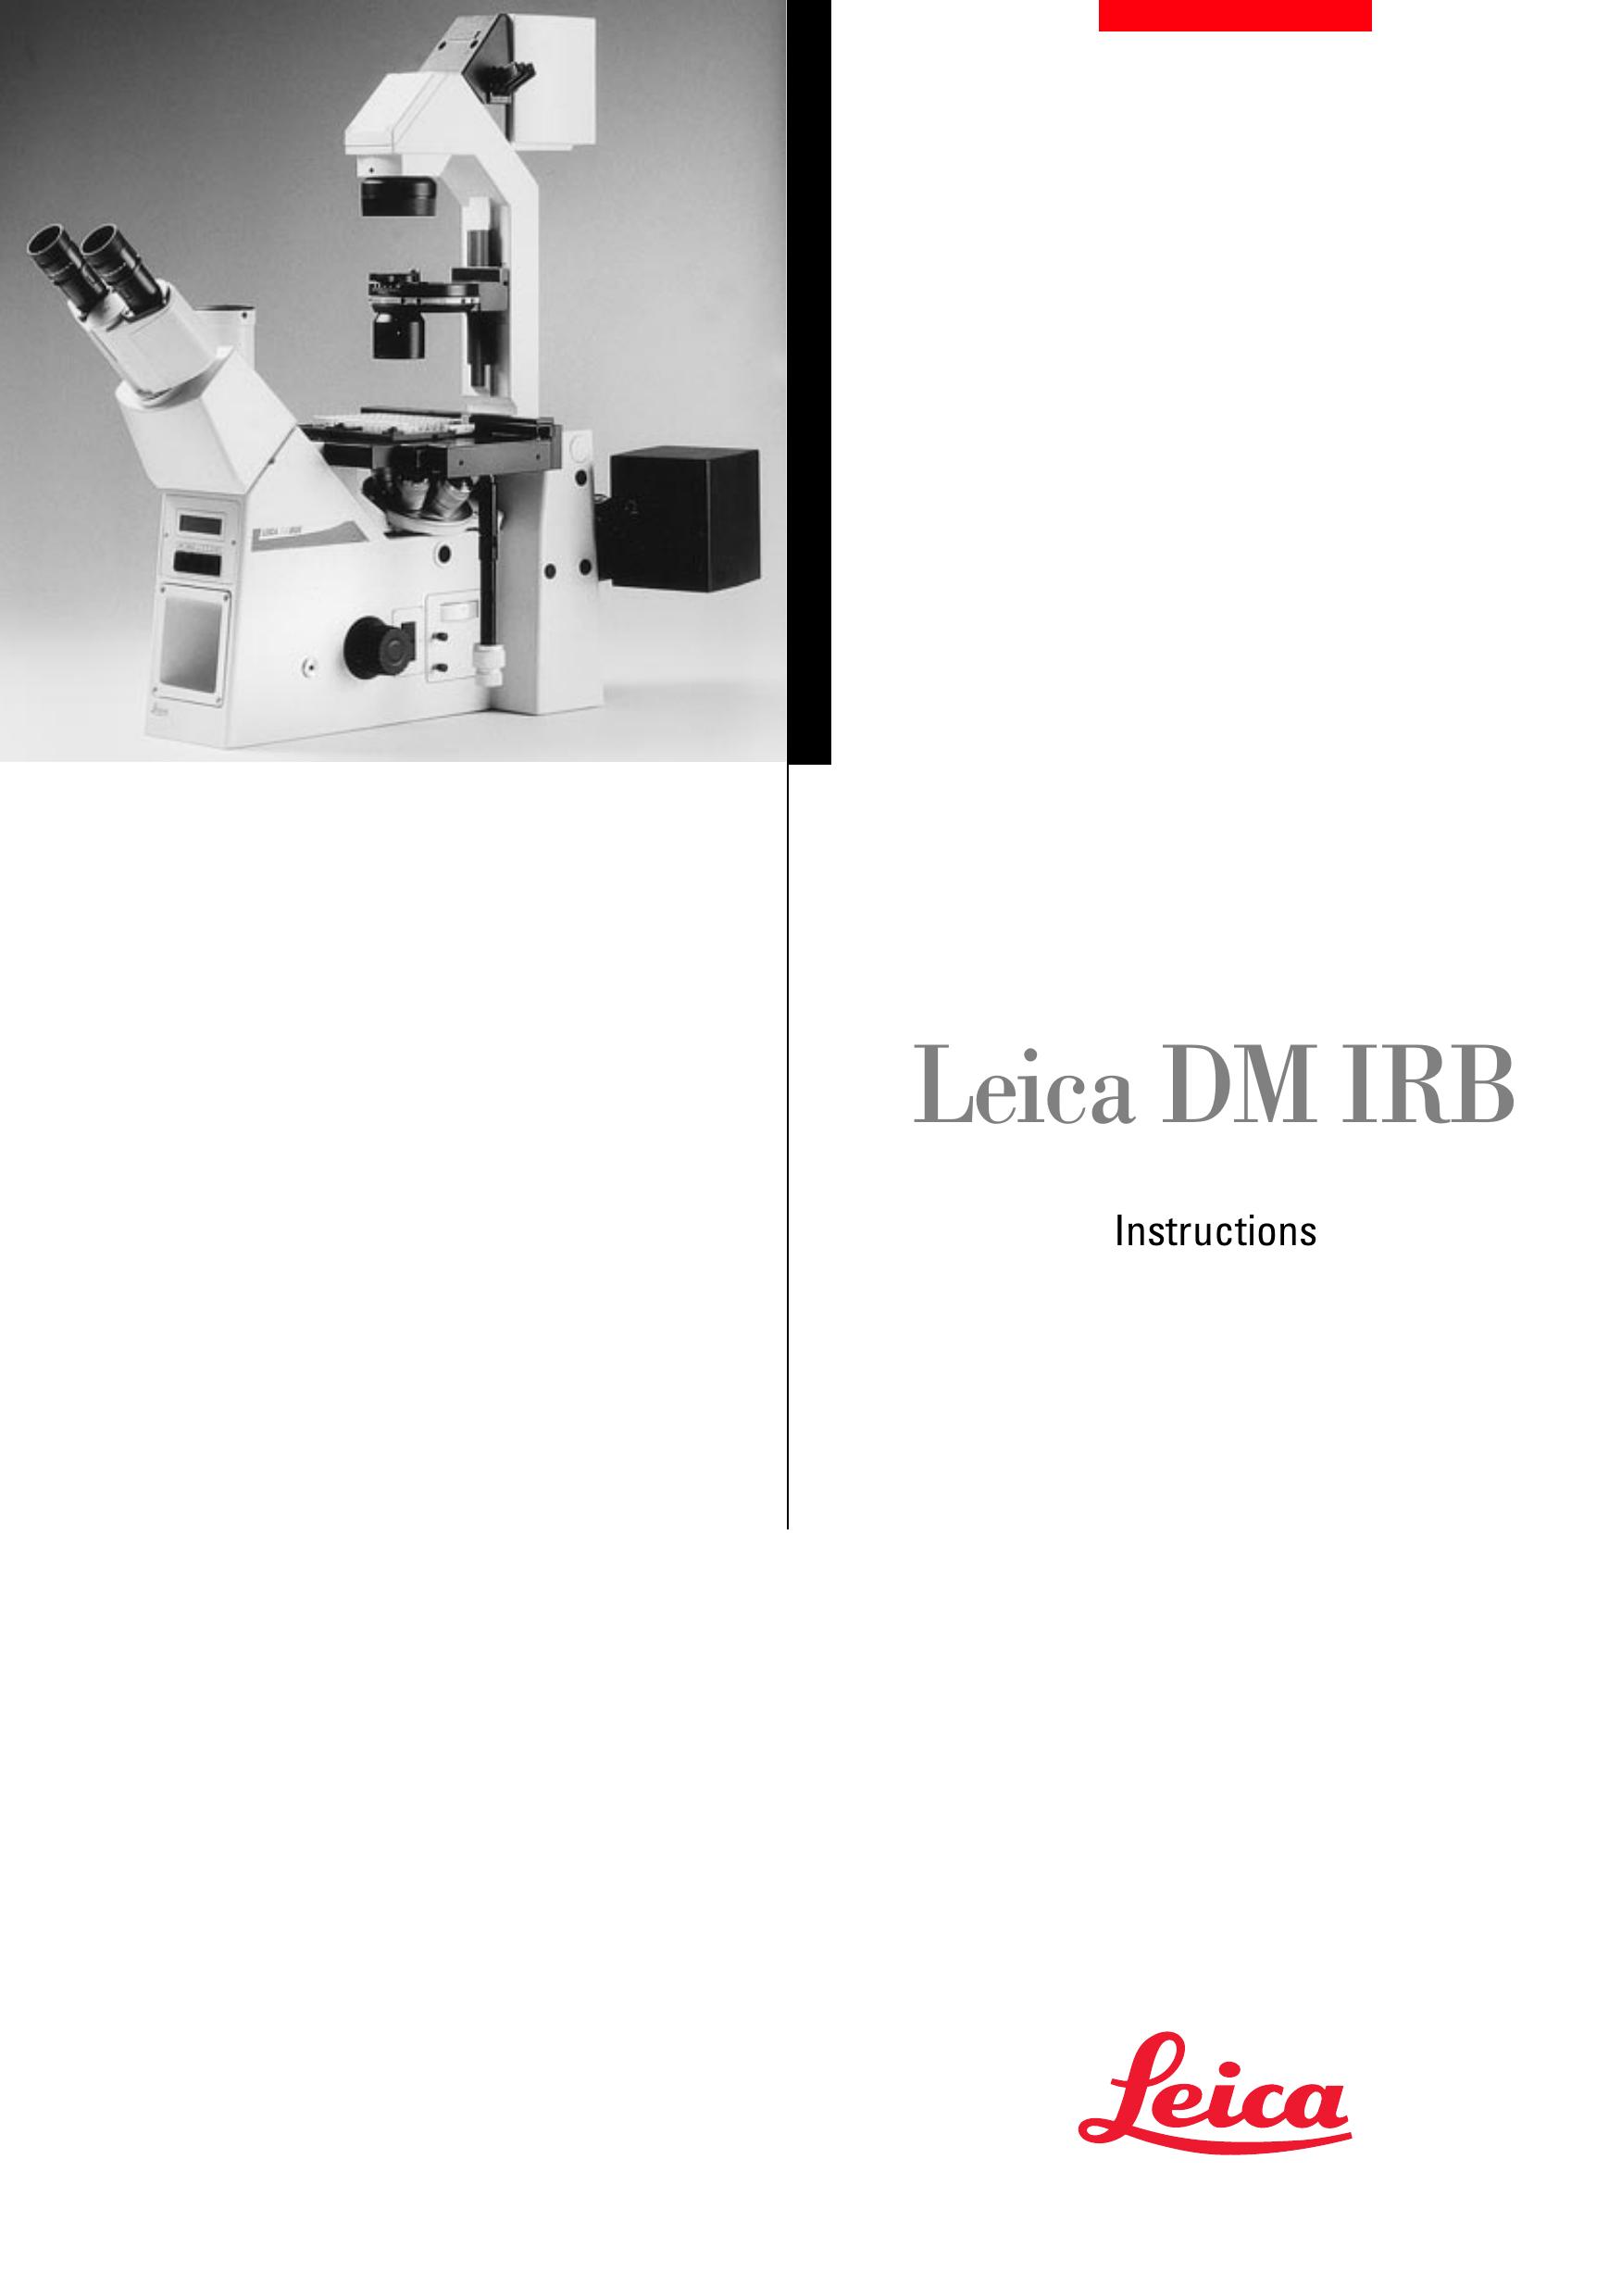 Leica DM IRB Microscope & Magnifier User Manual